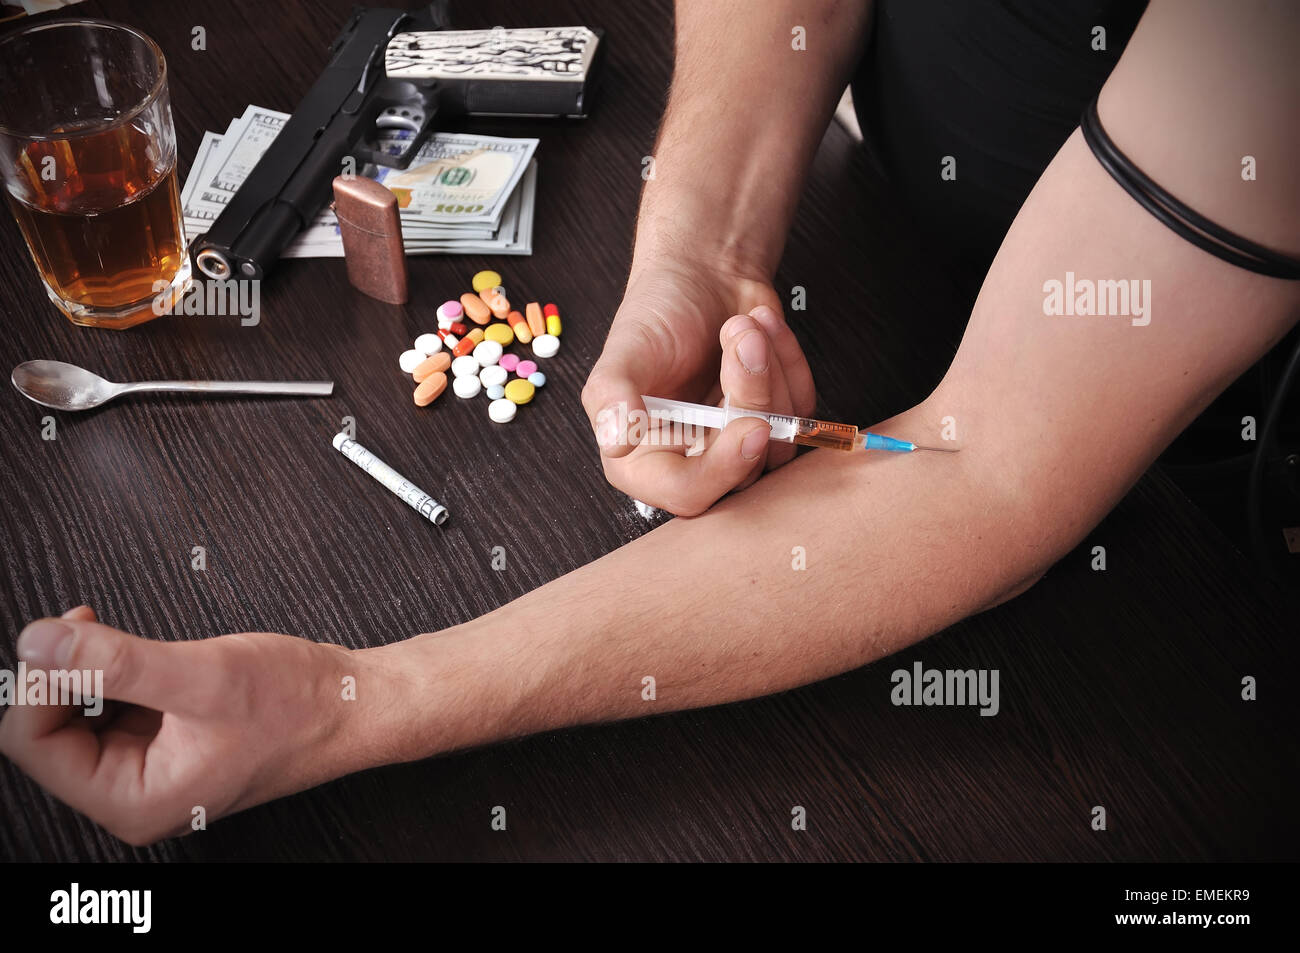 addict takes drugs, close up Stock Photo